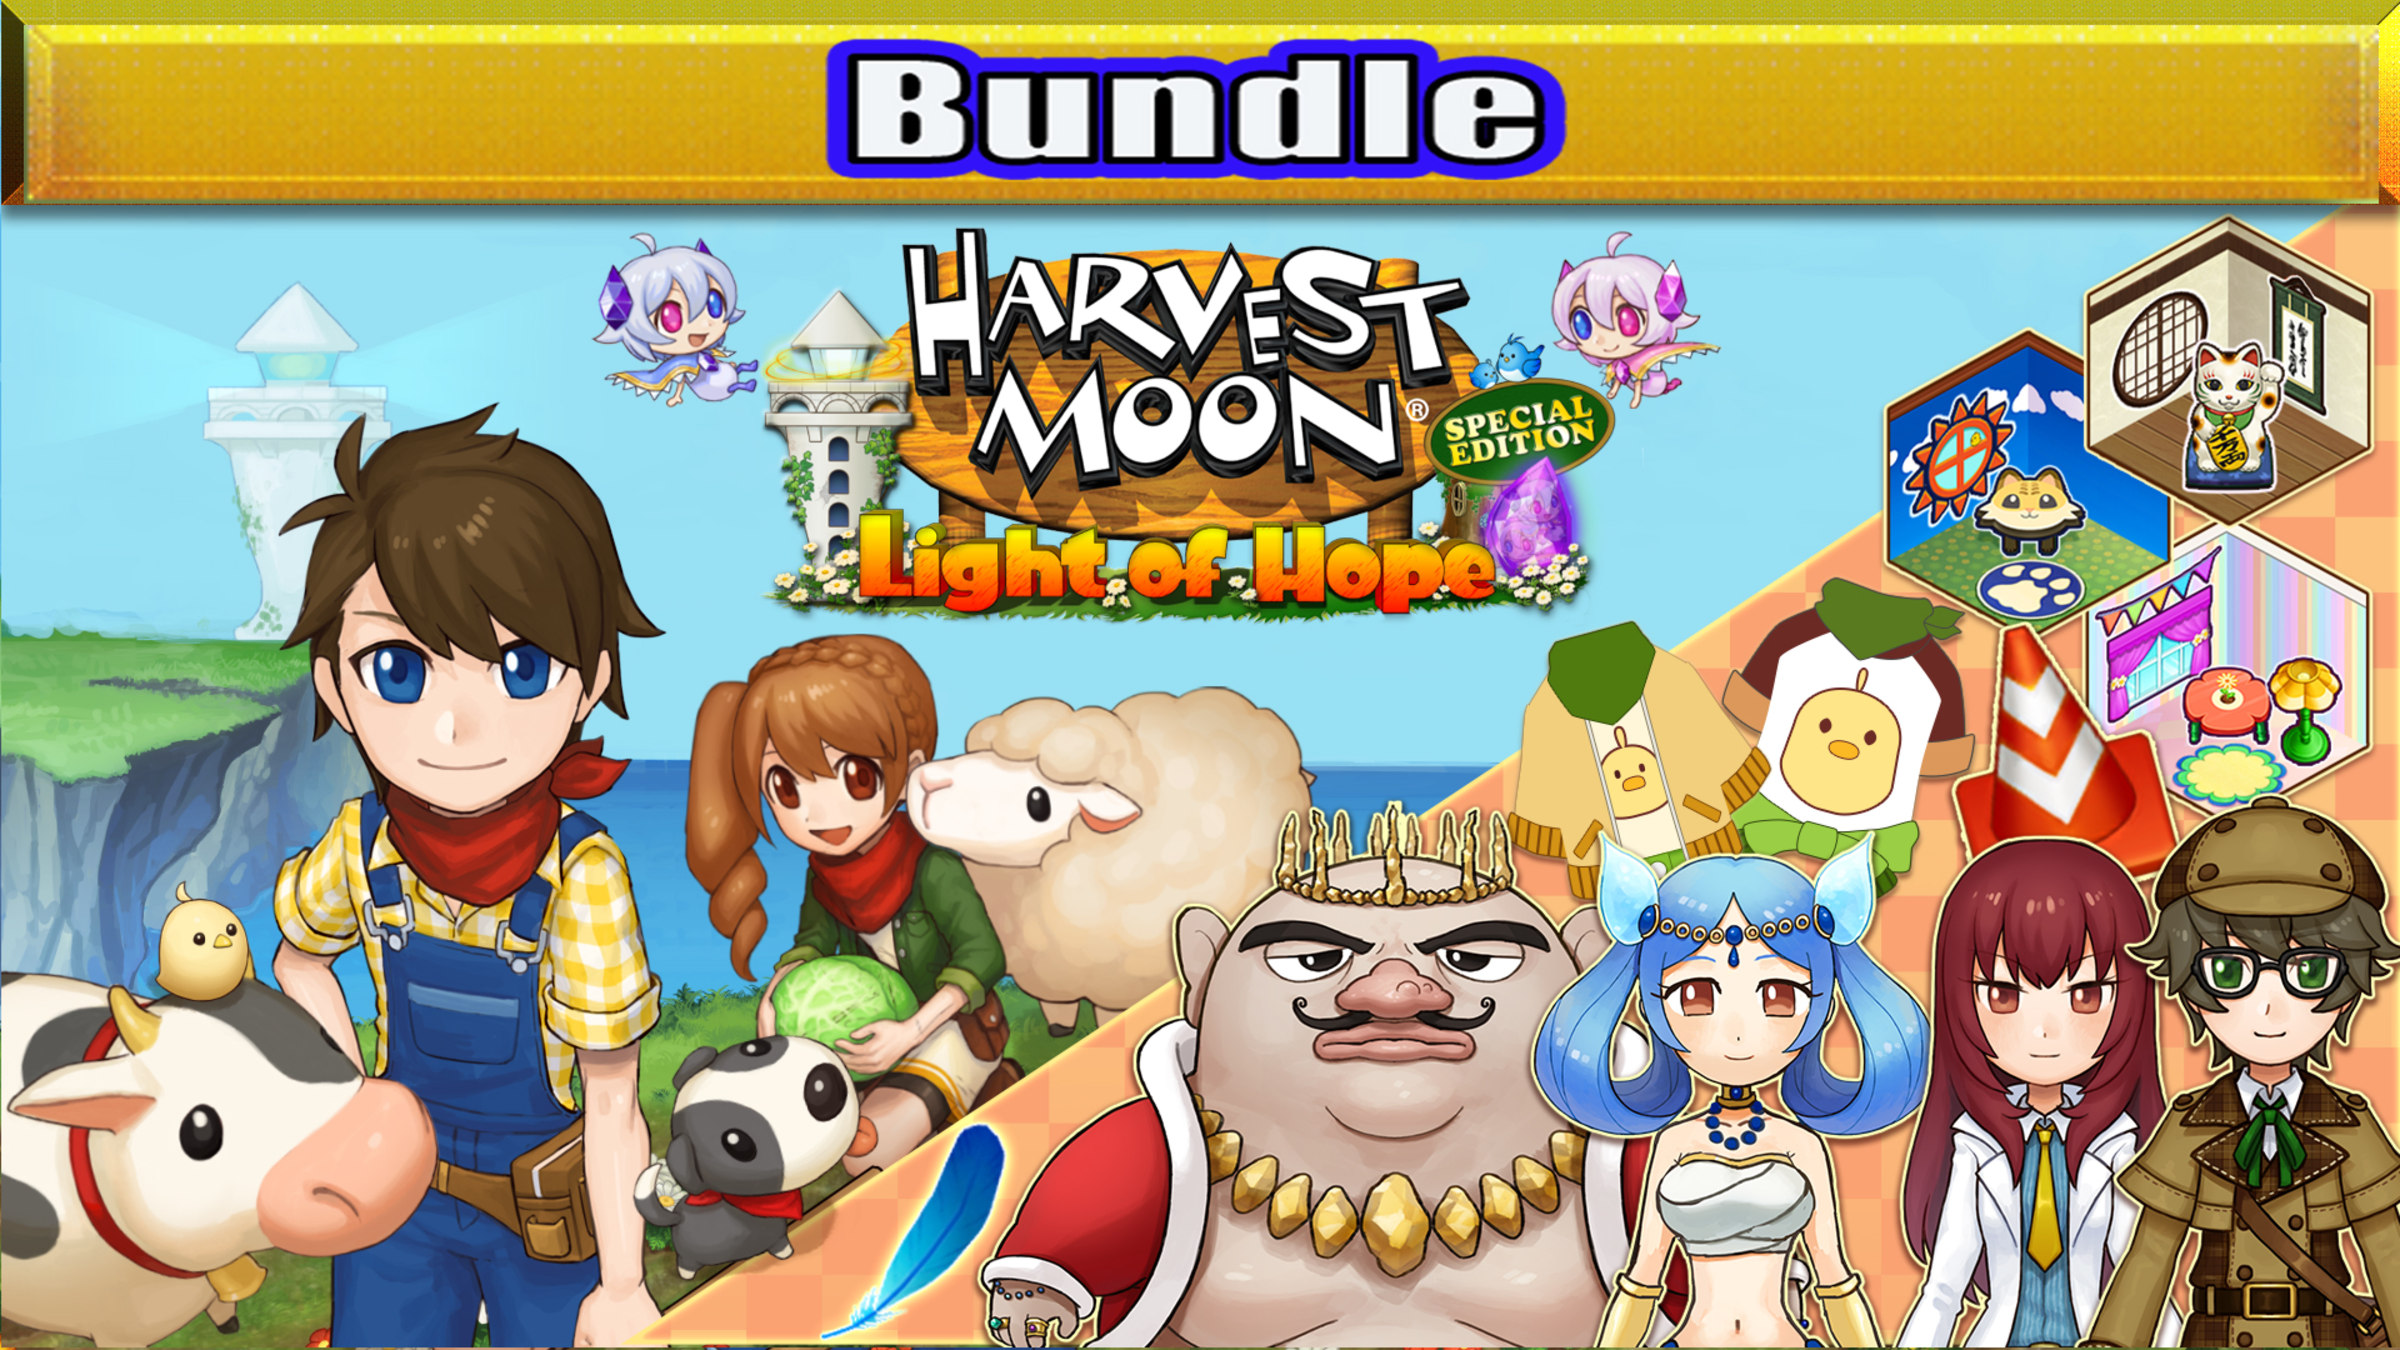 Harvest moon bot. Harvest Moon Нинтендо. Harvest Moon: Light of hope Special Edition. Ps4 - Harvest Moon - Light of hope - Special Edition. Harvest Moon 1996.